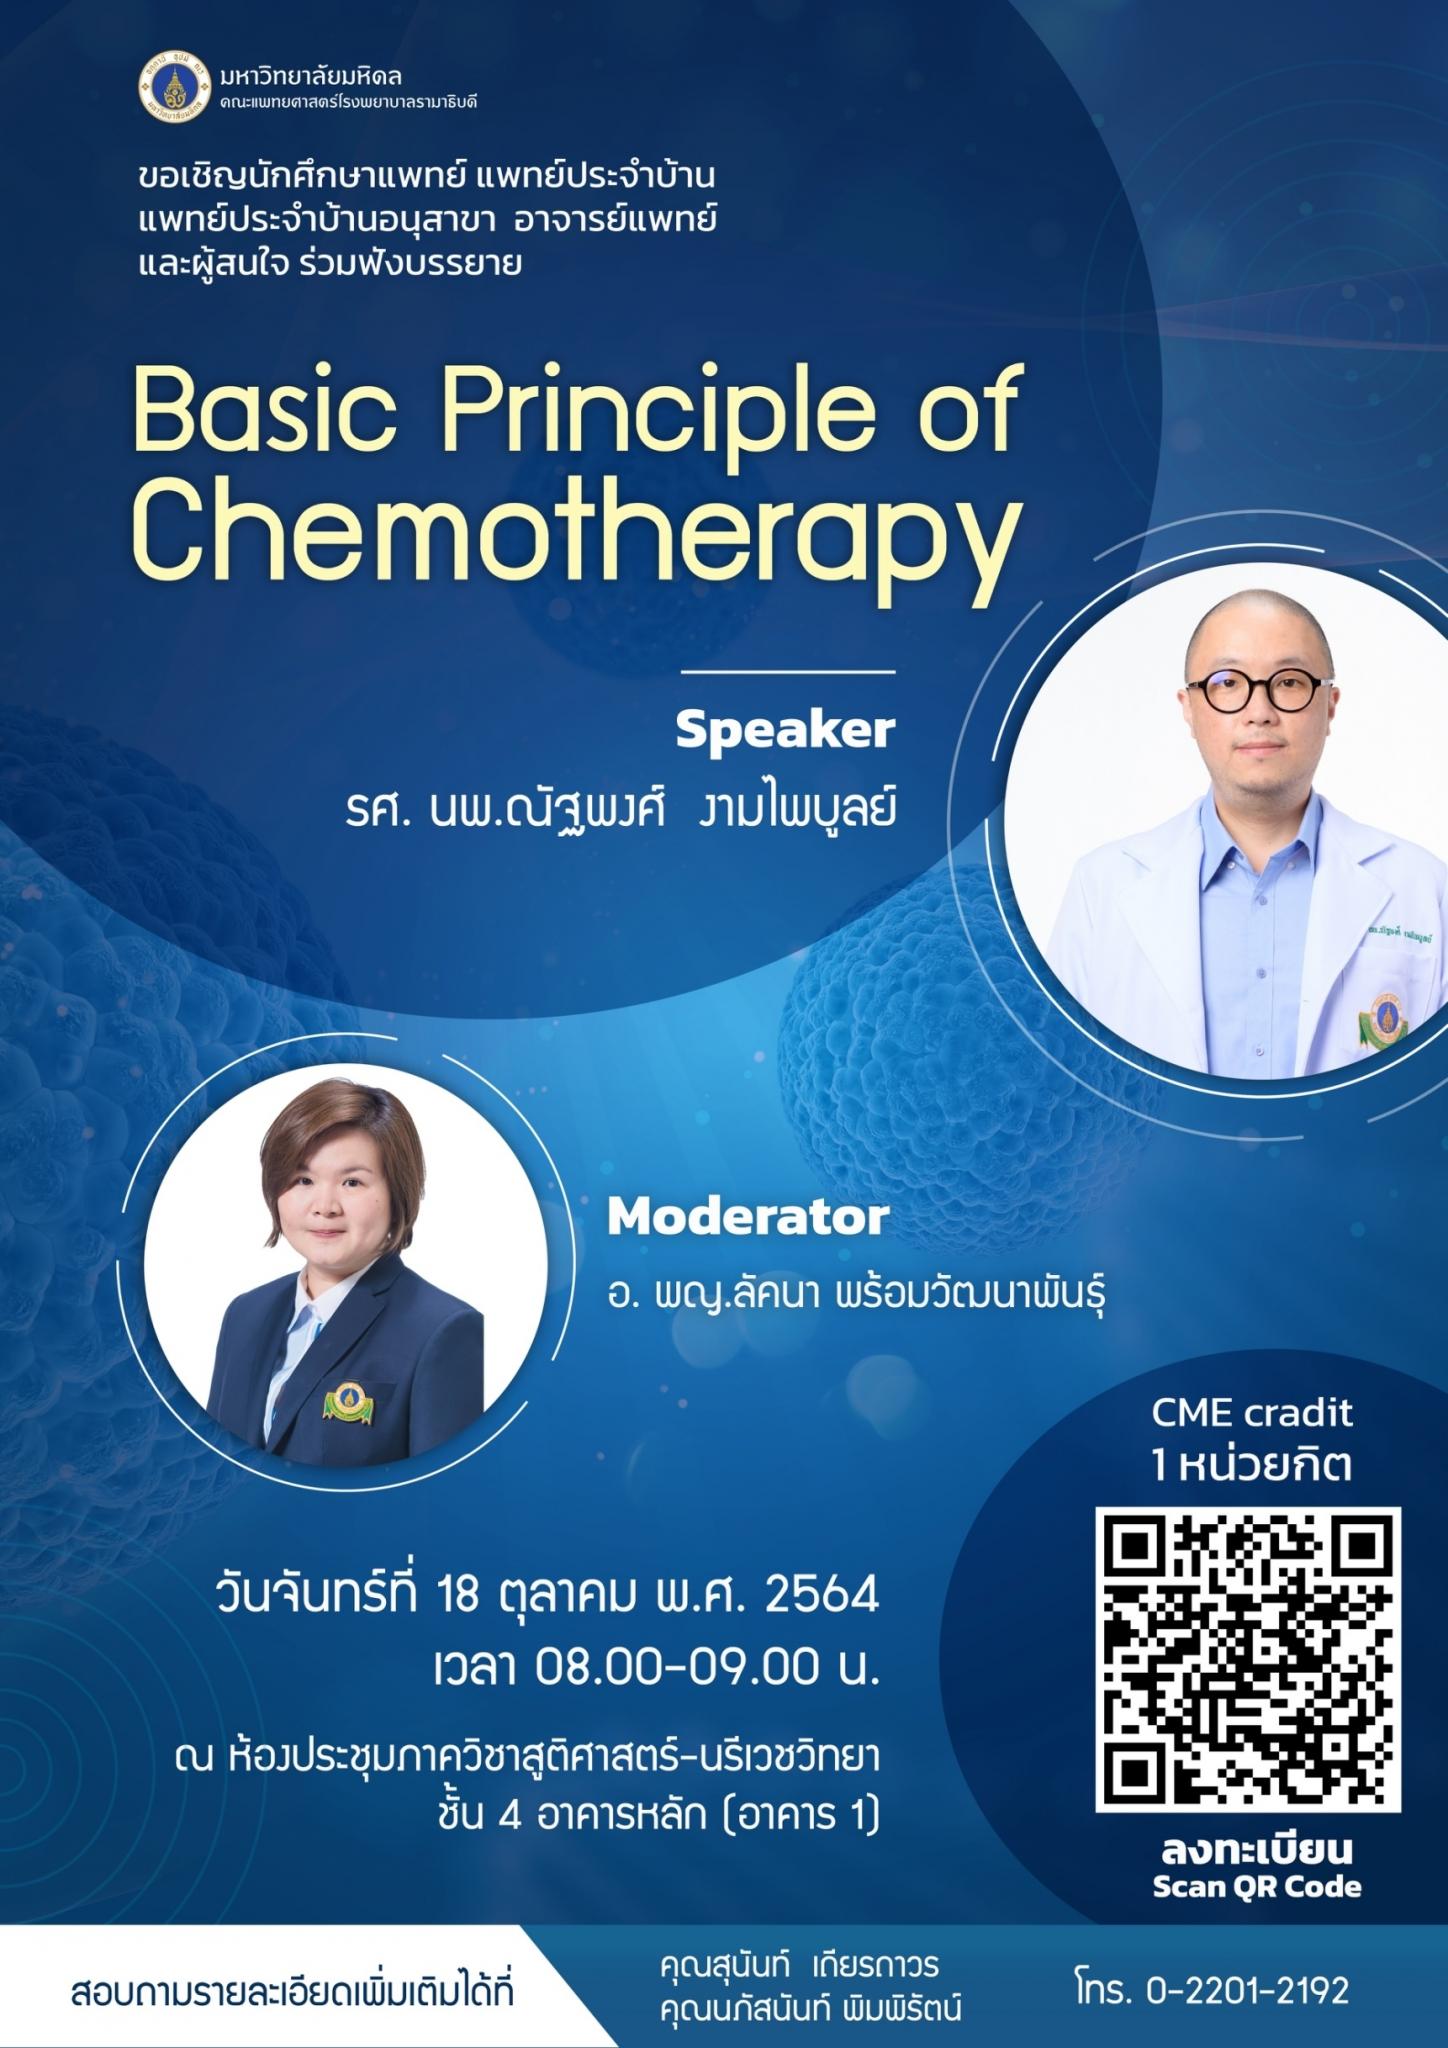 Basic Principle of Chemotherapy